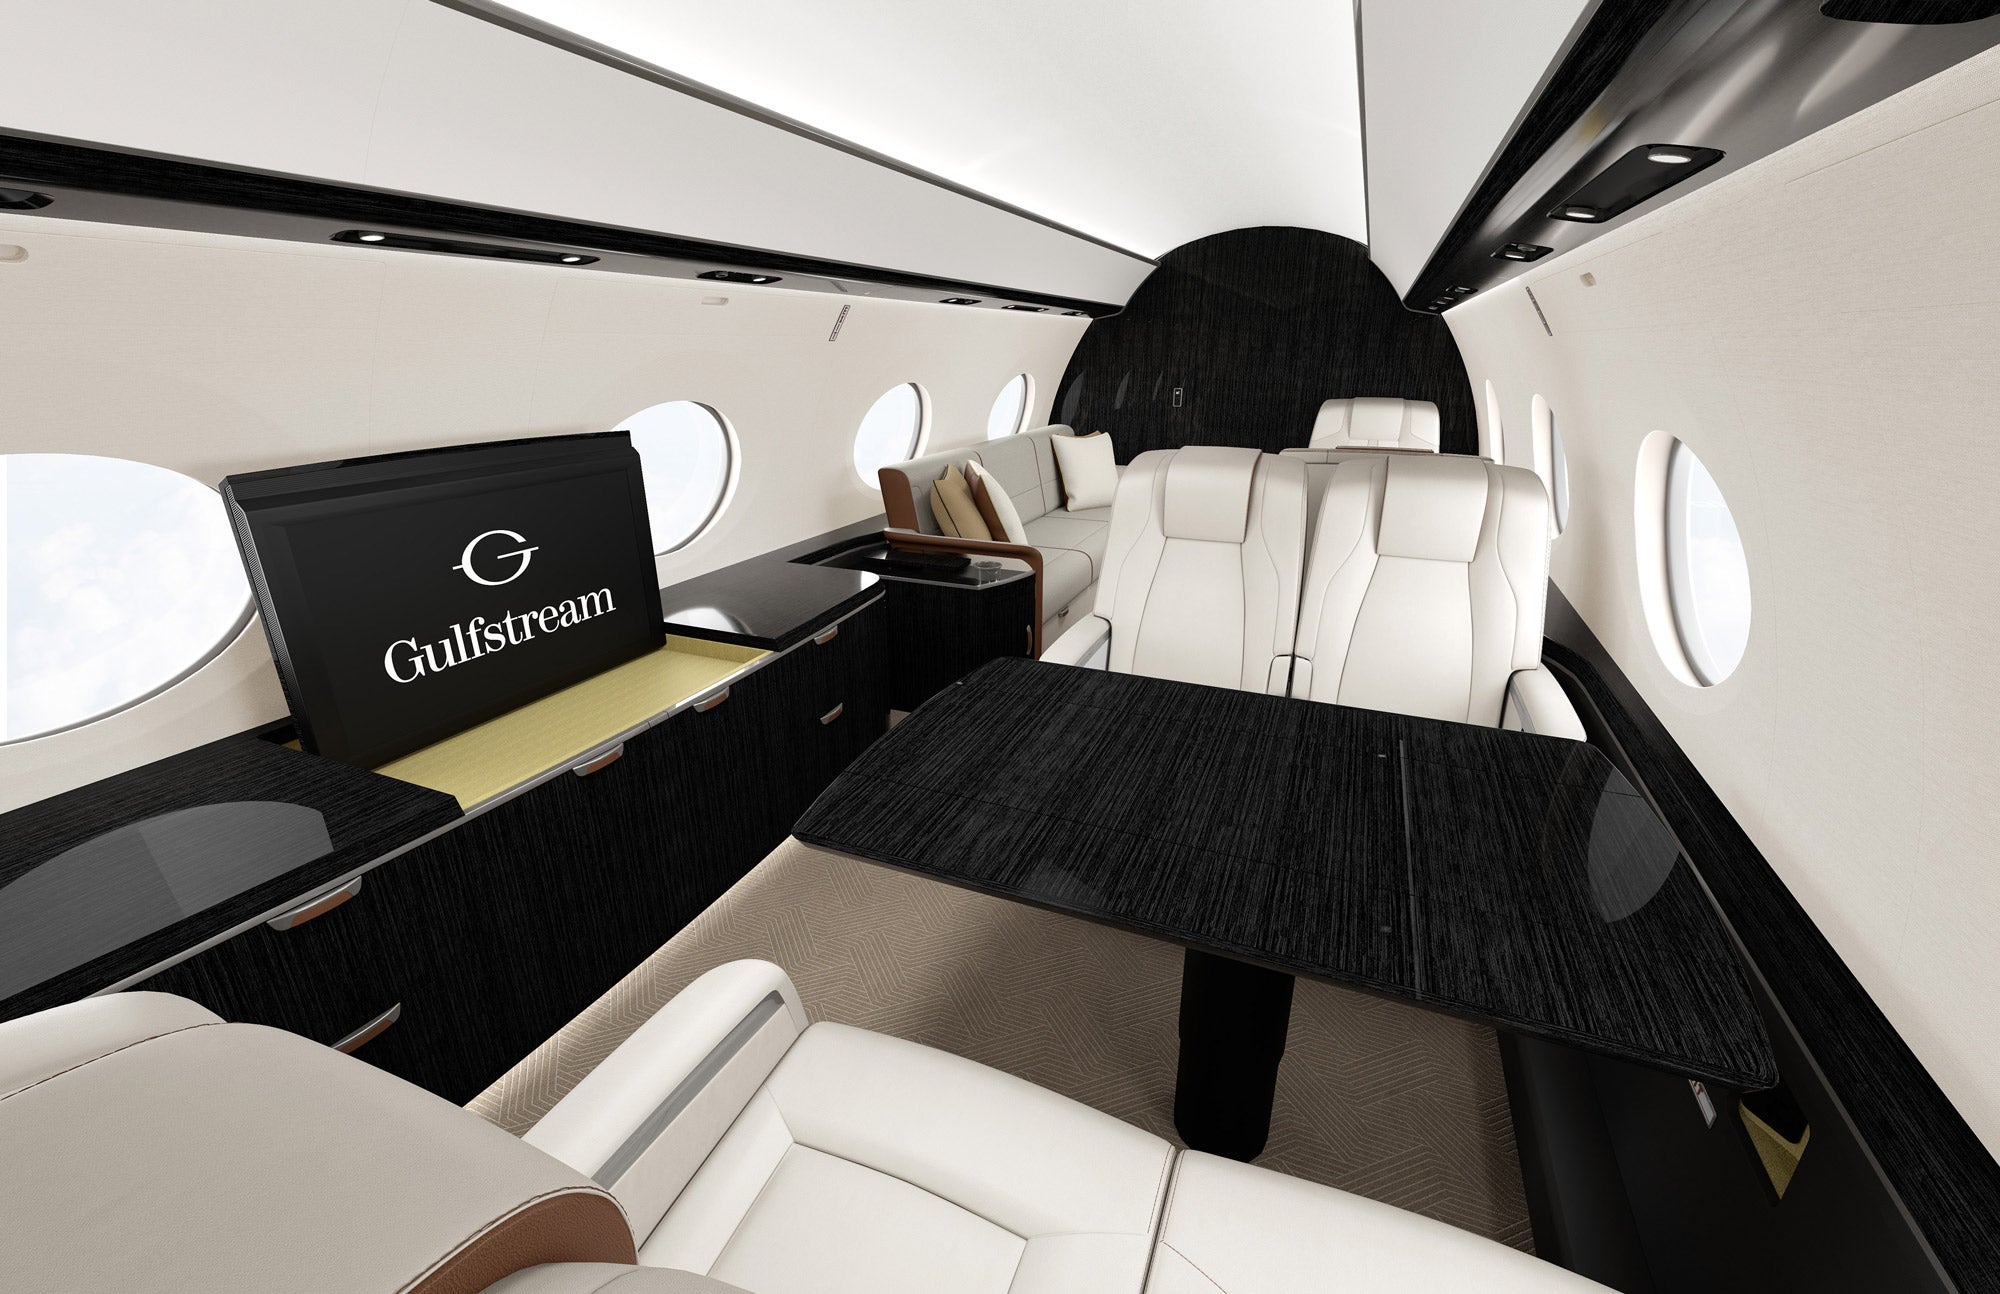 Gulfstream G800 Interior Dining Area